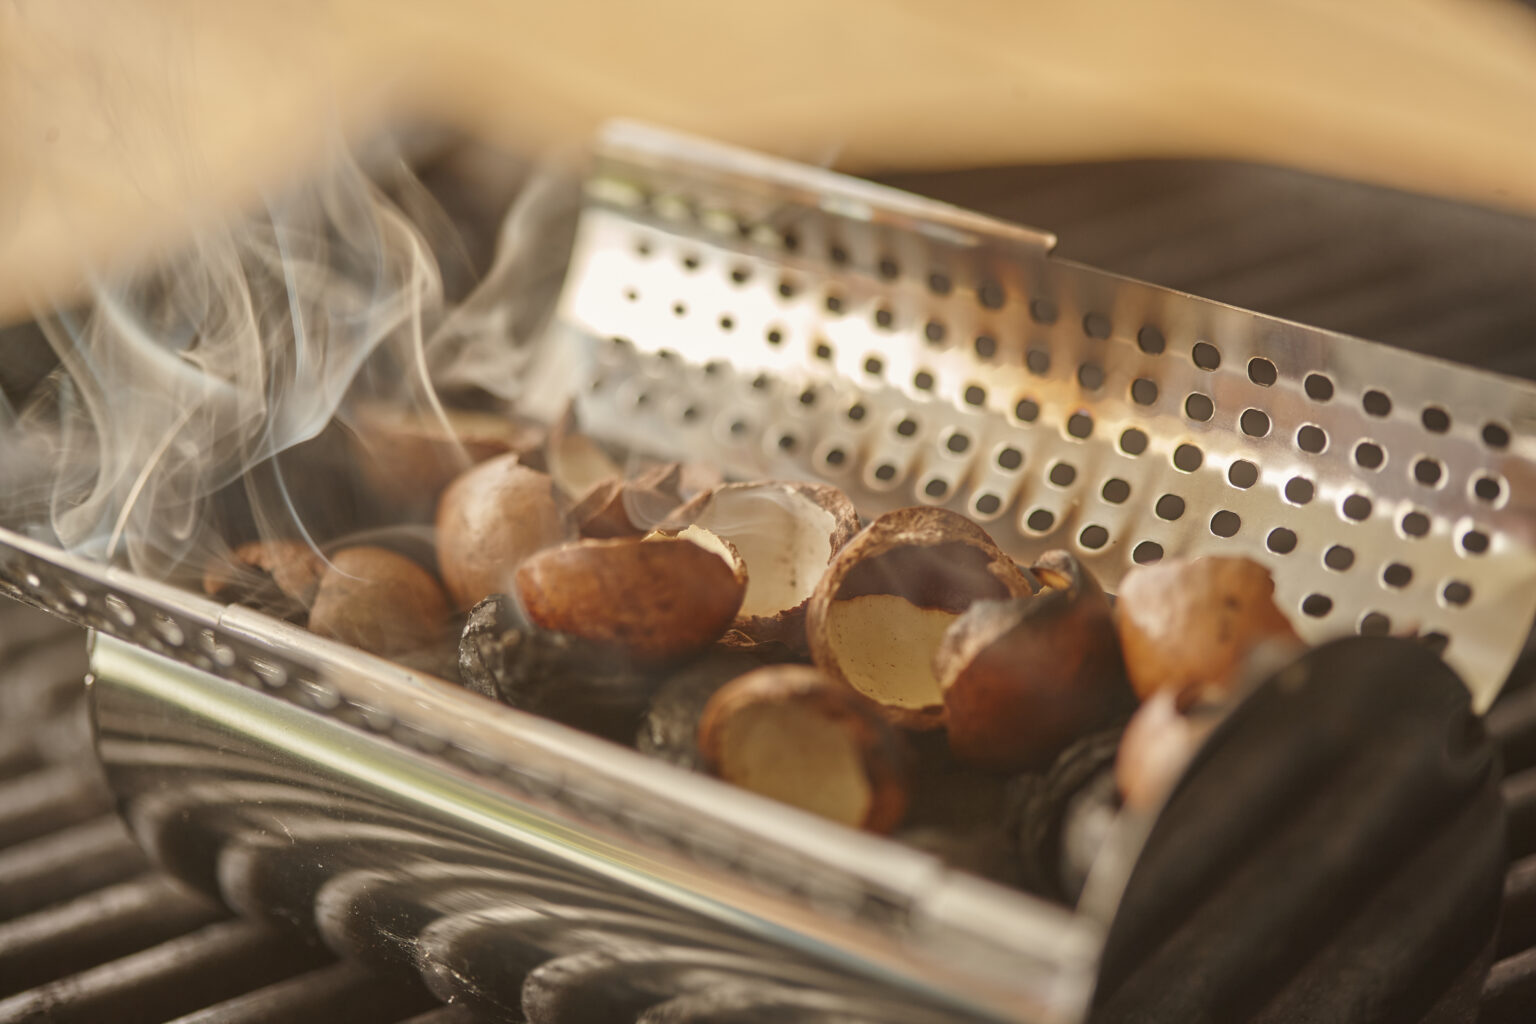 Step by step guide to smoking macadamia nuts